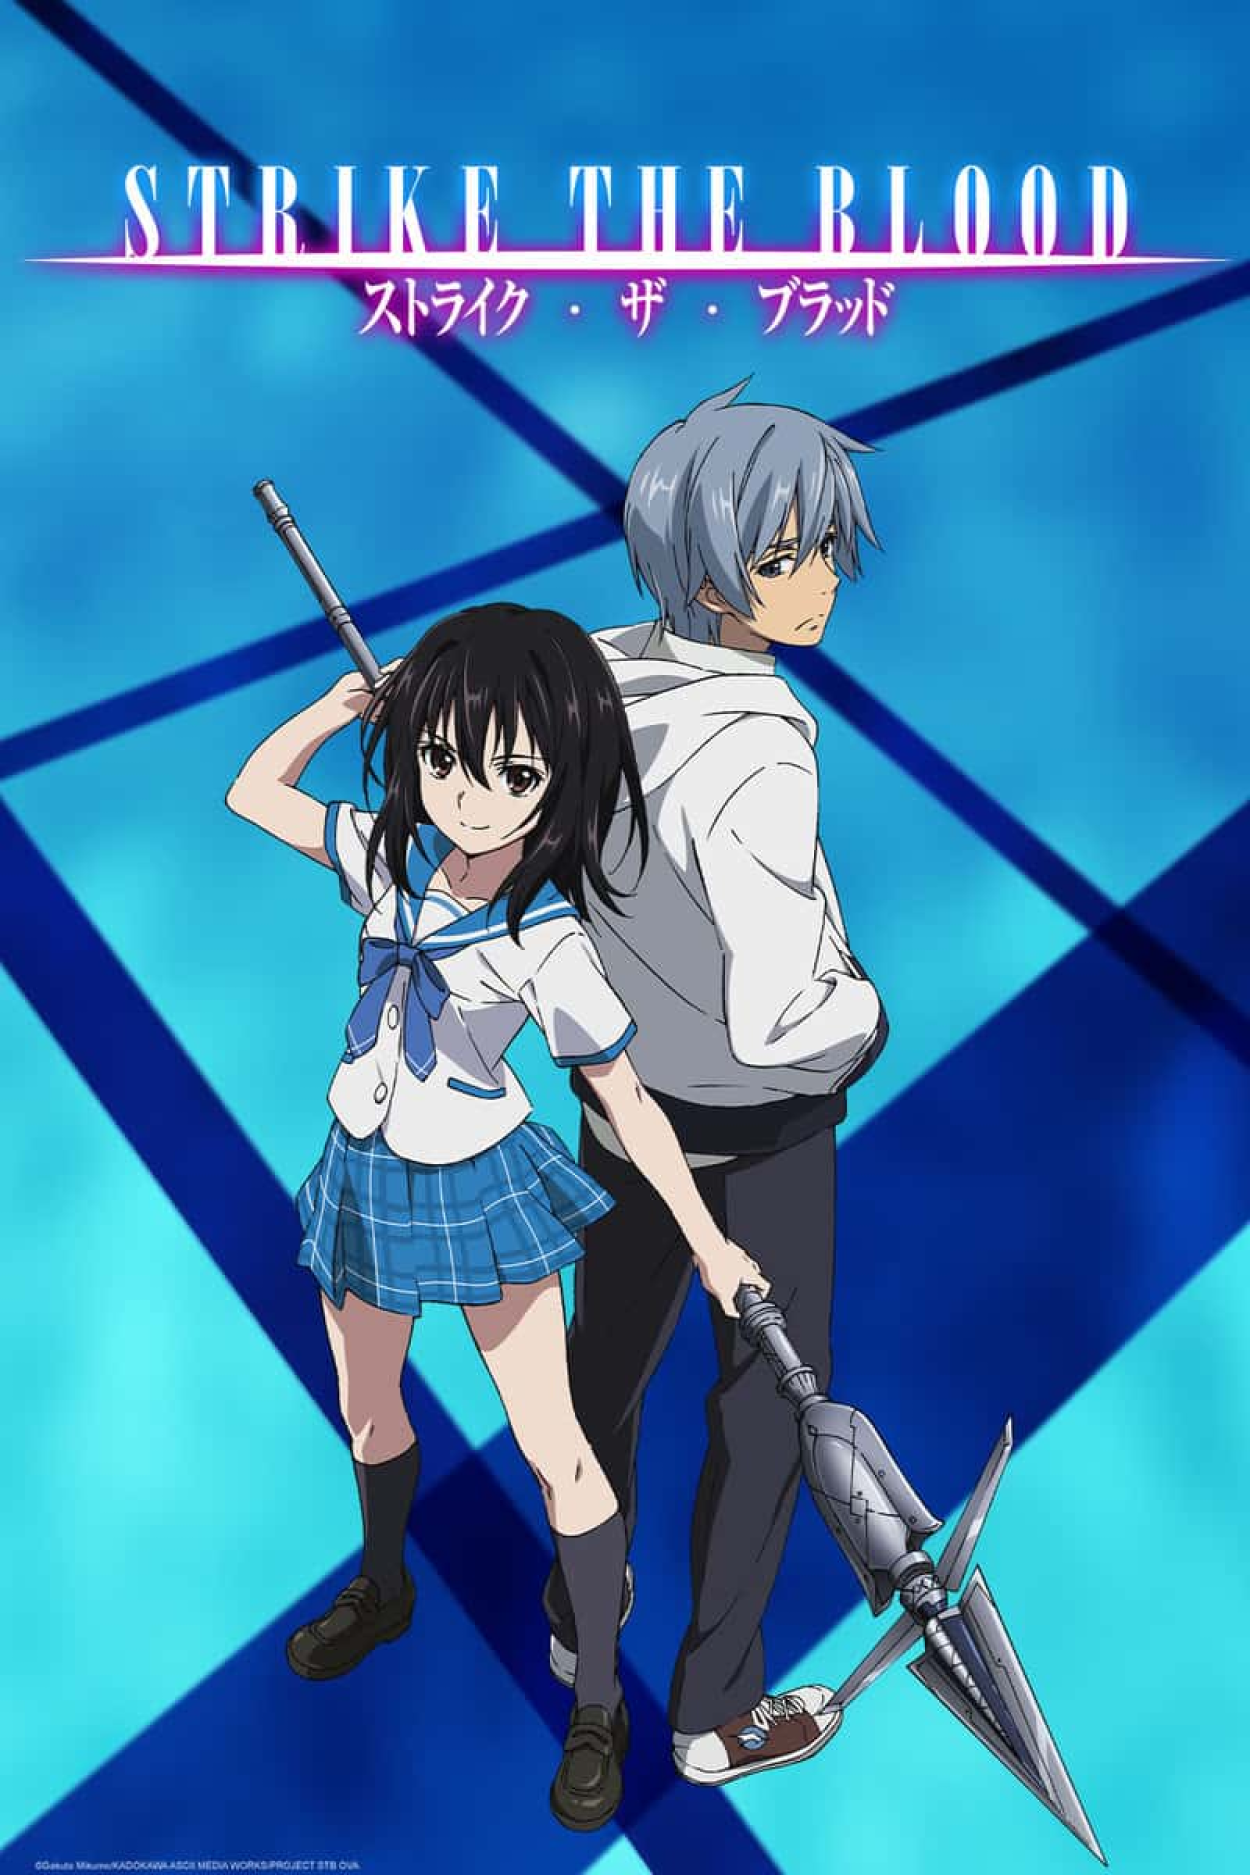 Anime Kiseijuu - Sinopse, Trailers, Curiosidades e muito mais - Cinema10